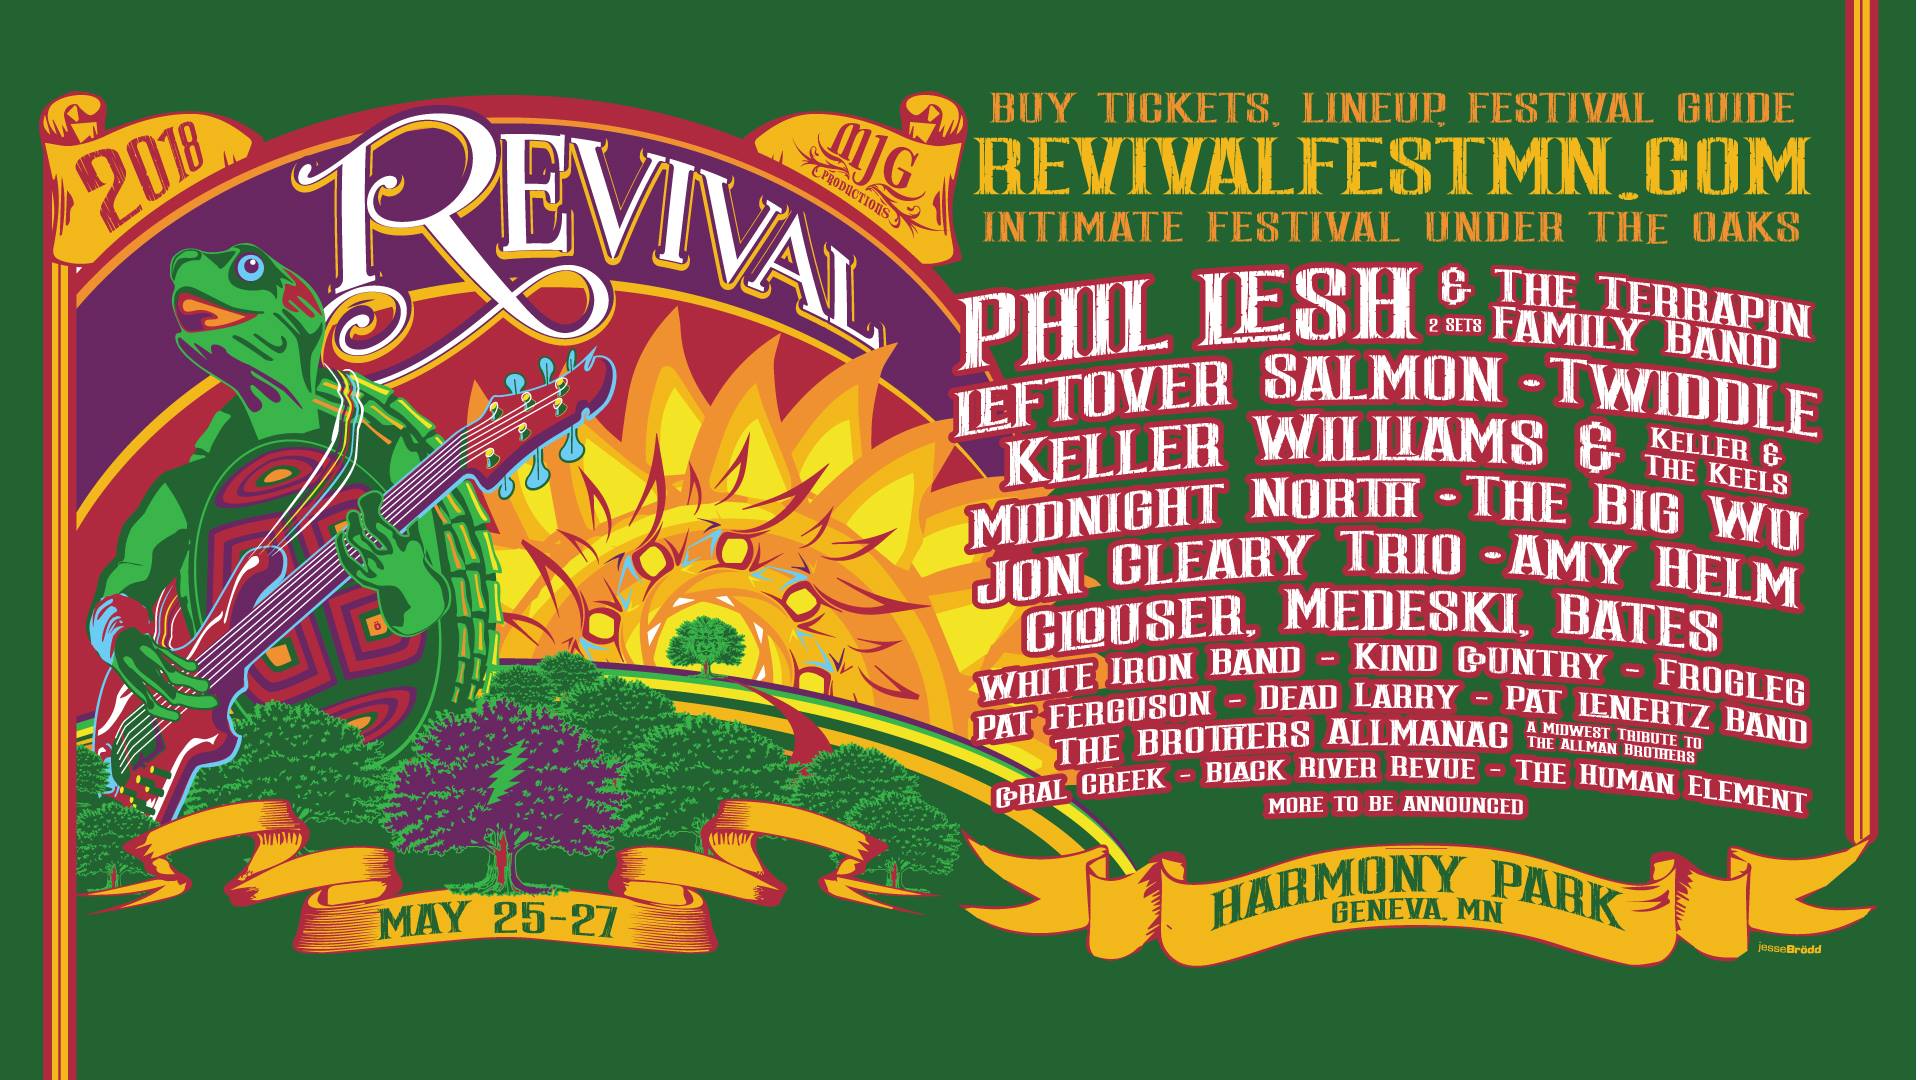 Phil Lesh & The Terrapin Family Band to Headline Revival Music Festival